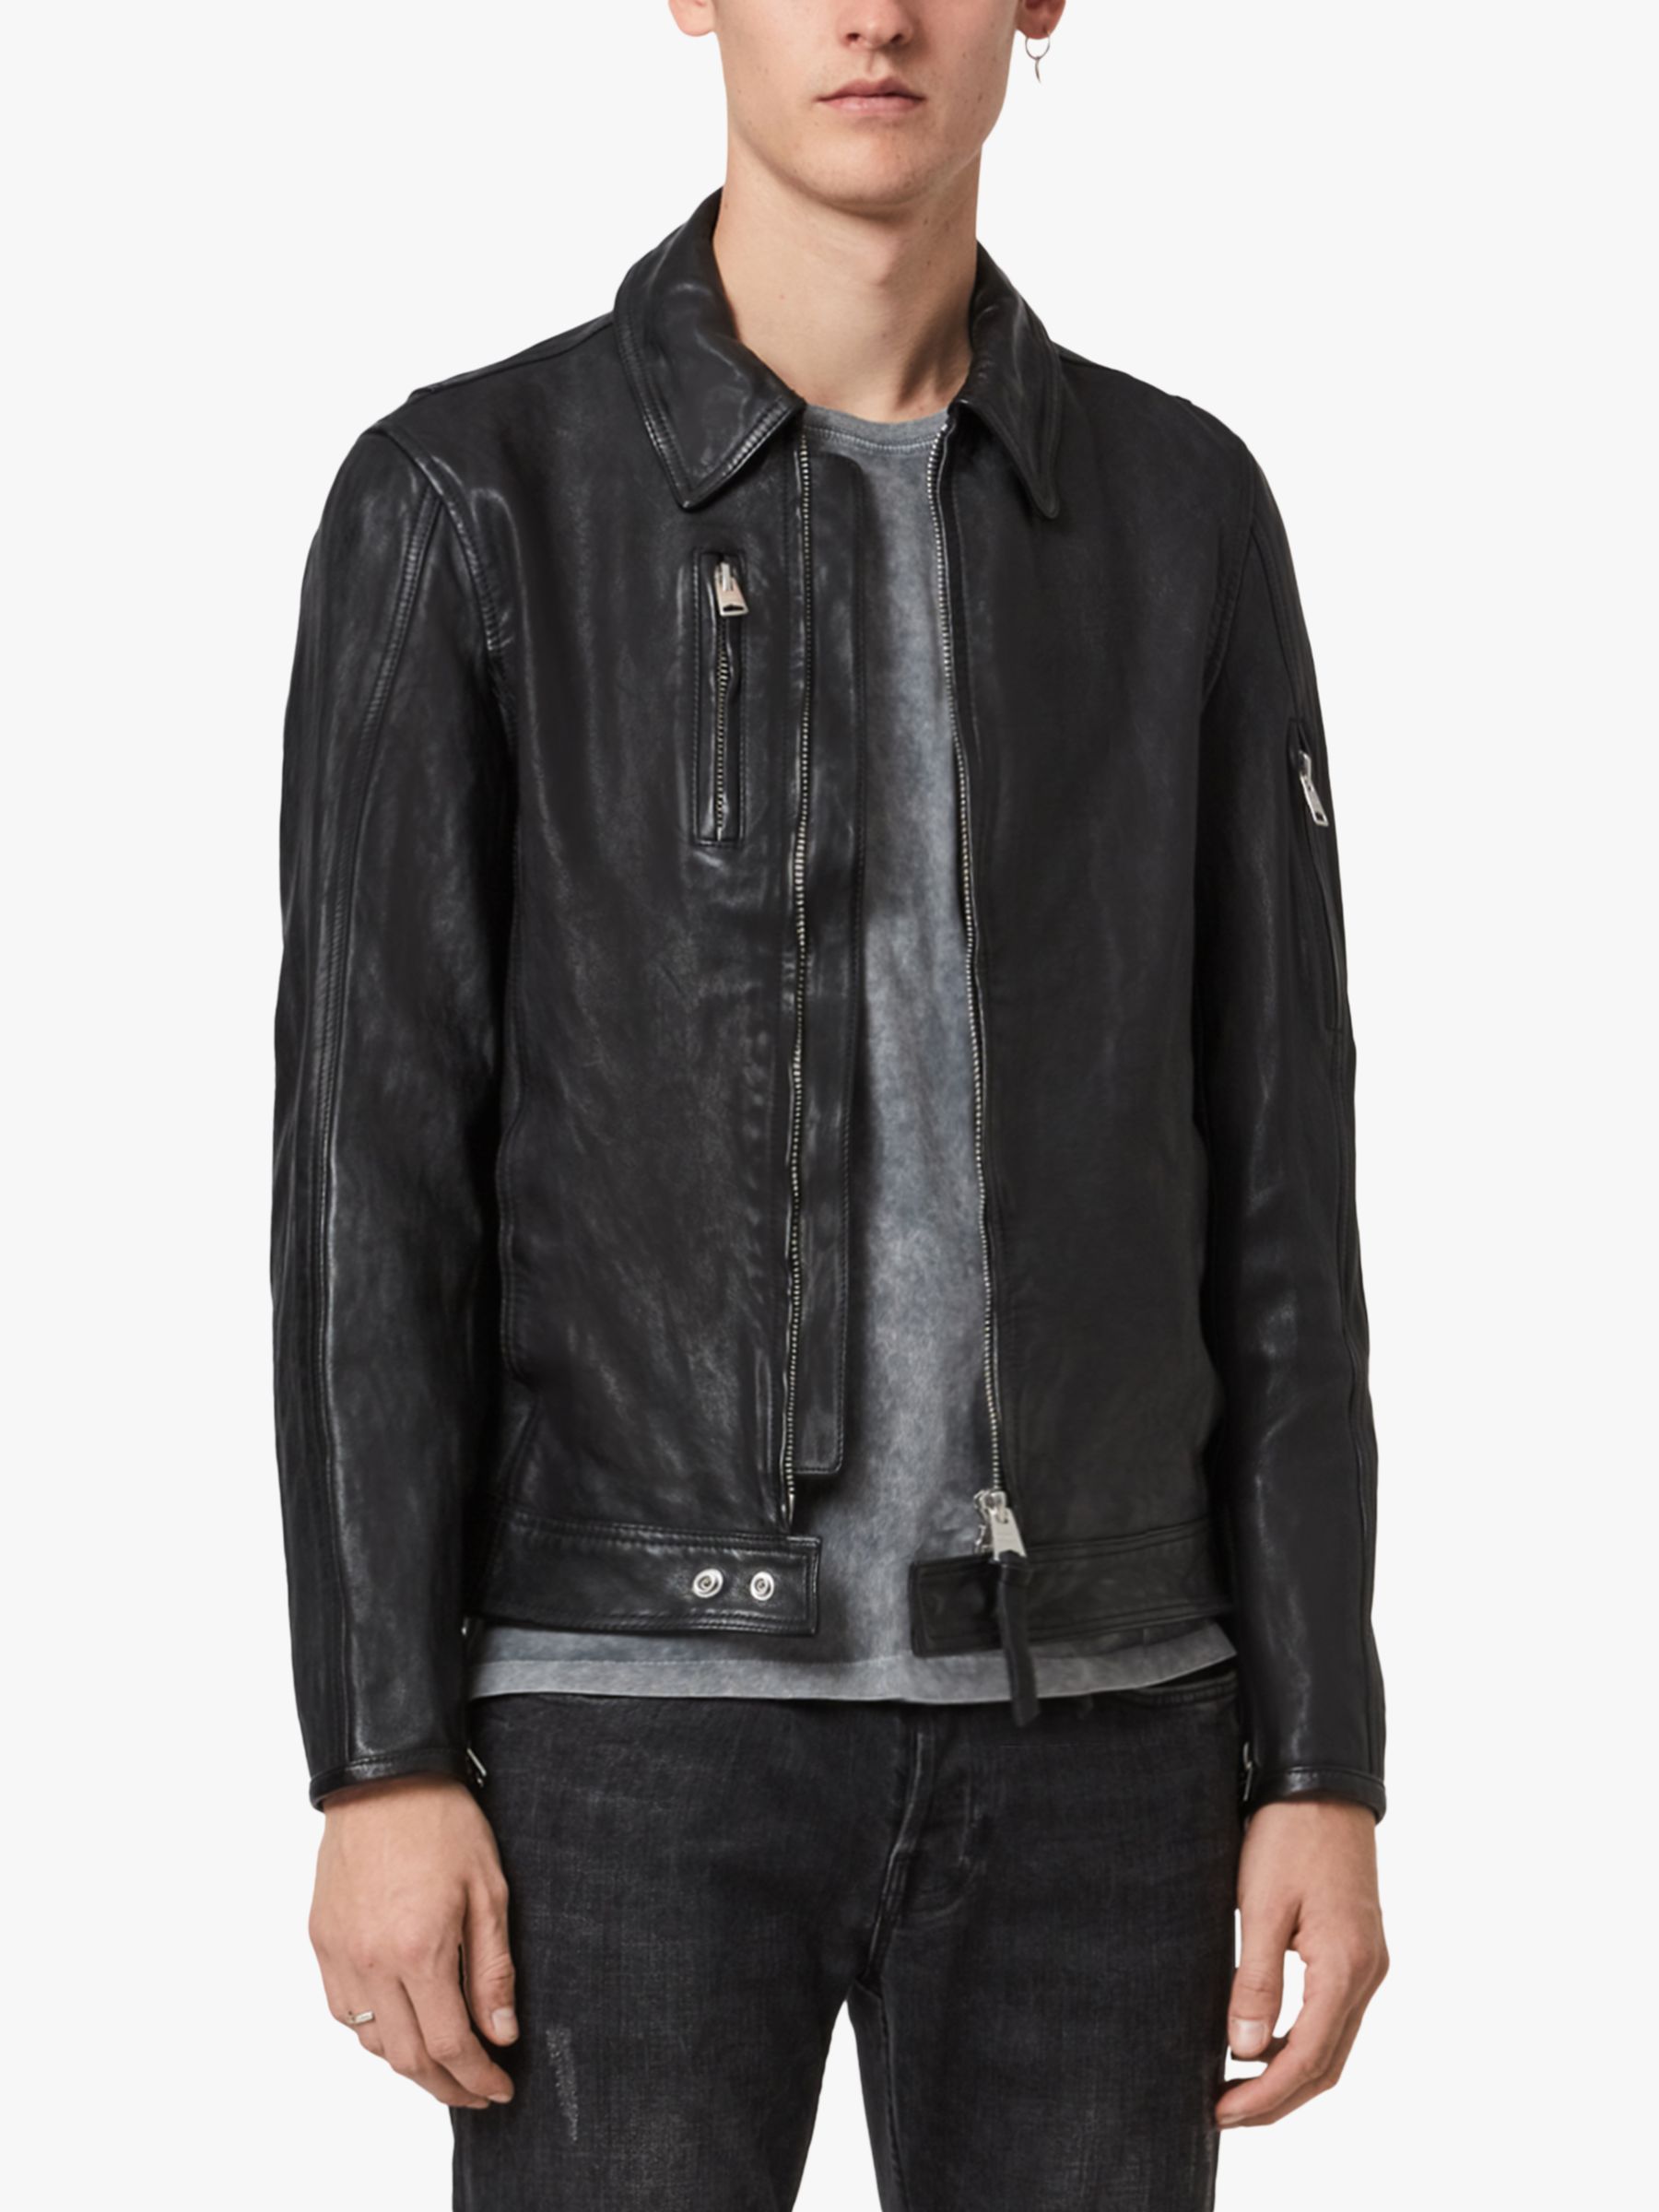 AllSaints Kaleb Leather Jacket, Black at John Lewis & Partners